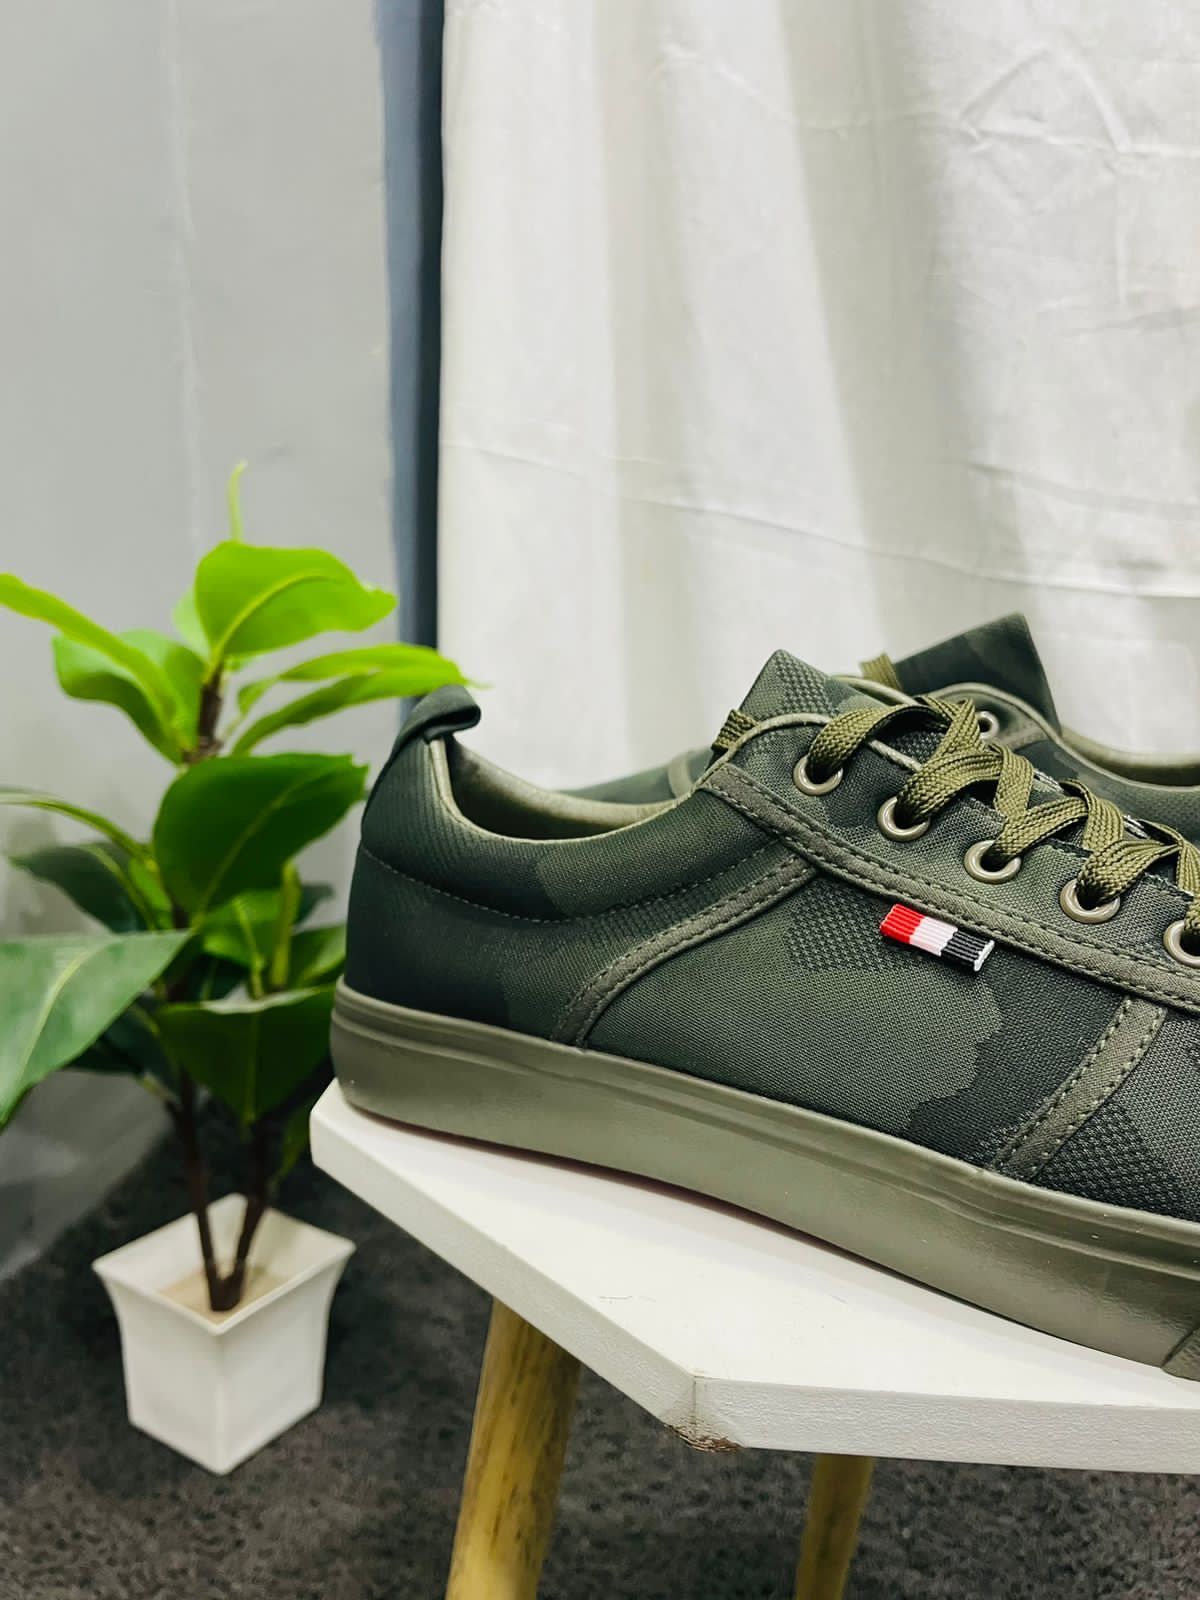 Men’s Dark Green Flat Sole Canvas Sneakers